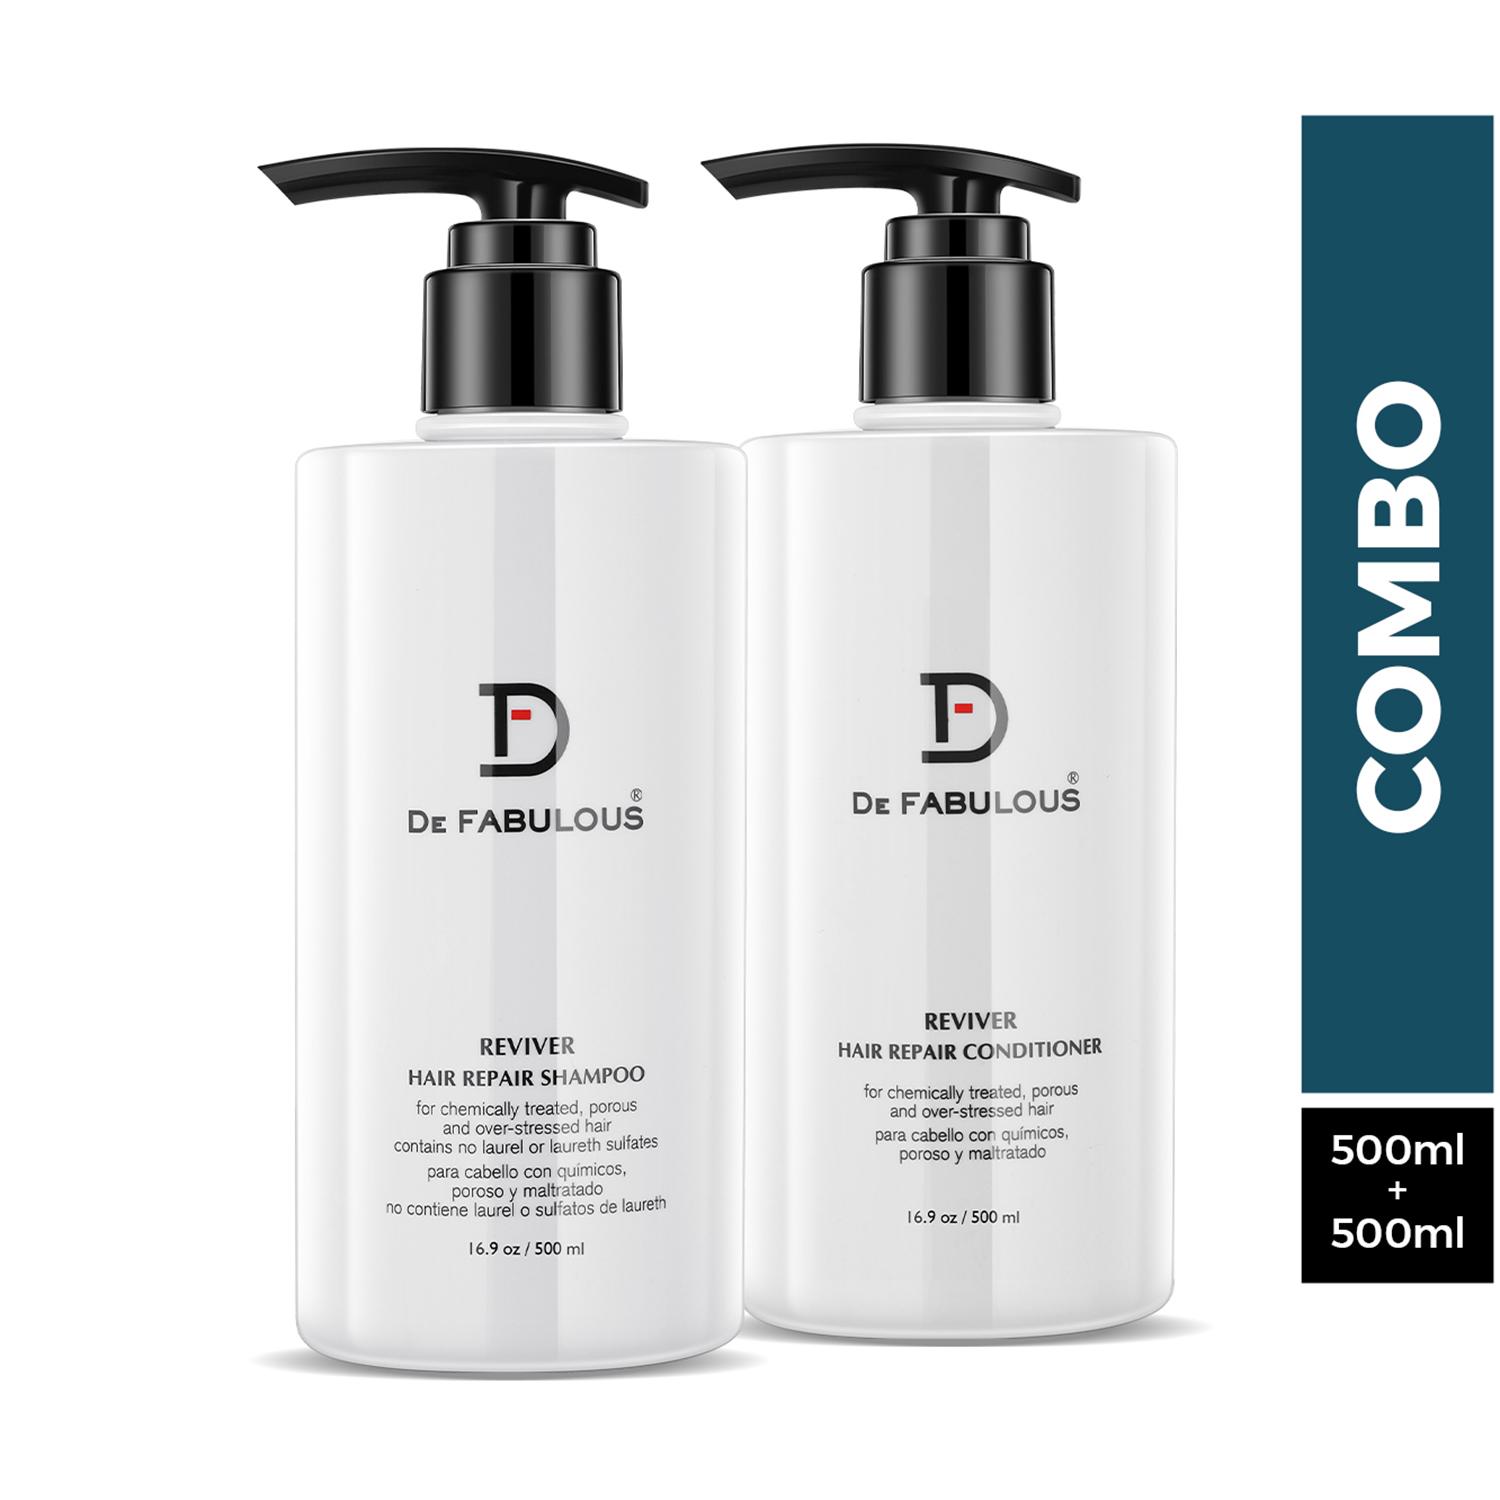 De Fabulous | De Fabulous Reviver Hair Repair Shampoo and Conditioner (500ml) Combo